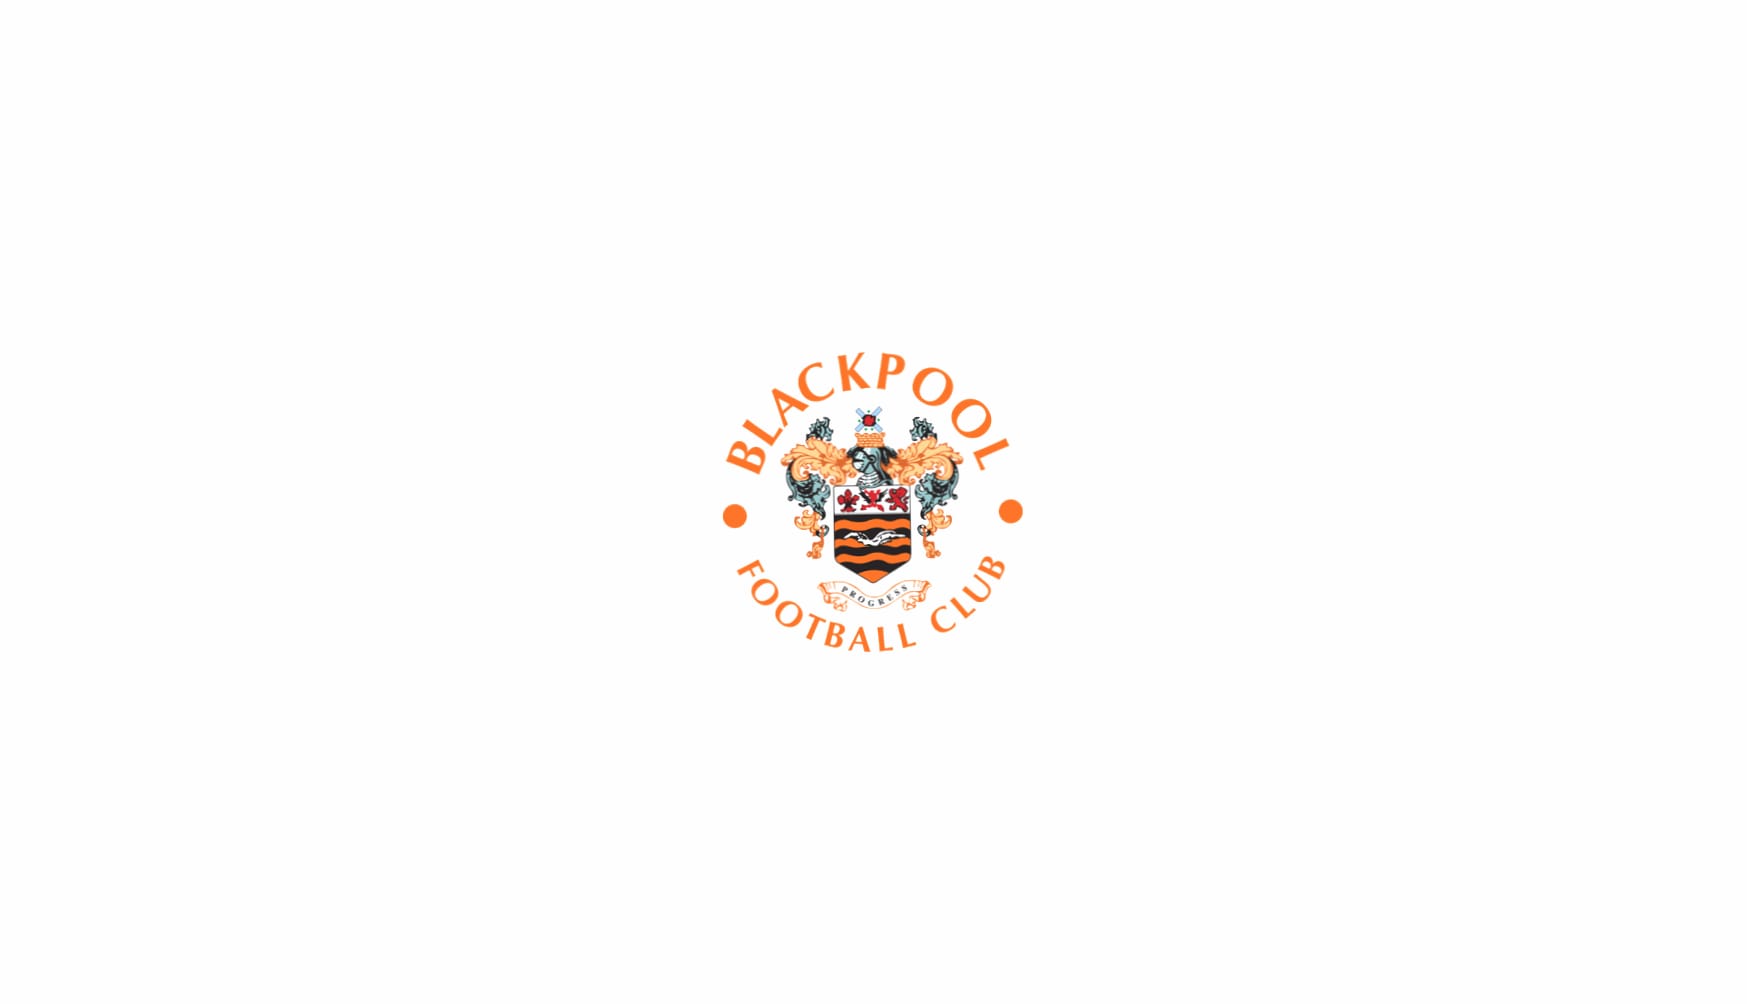 Blackpool F.C wallpapers HD quality